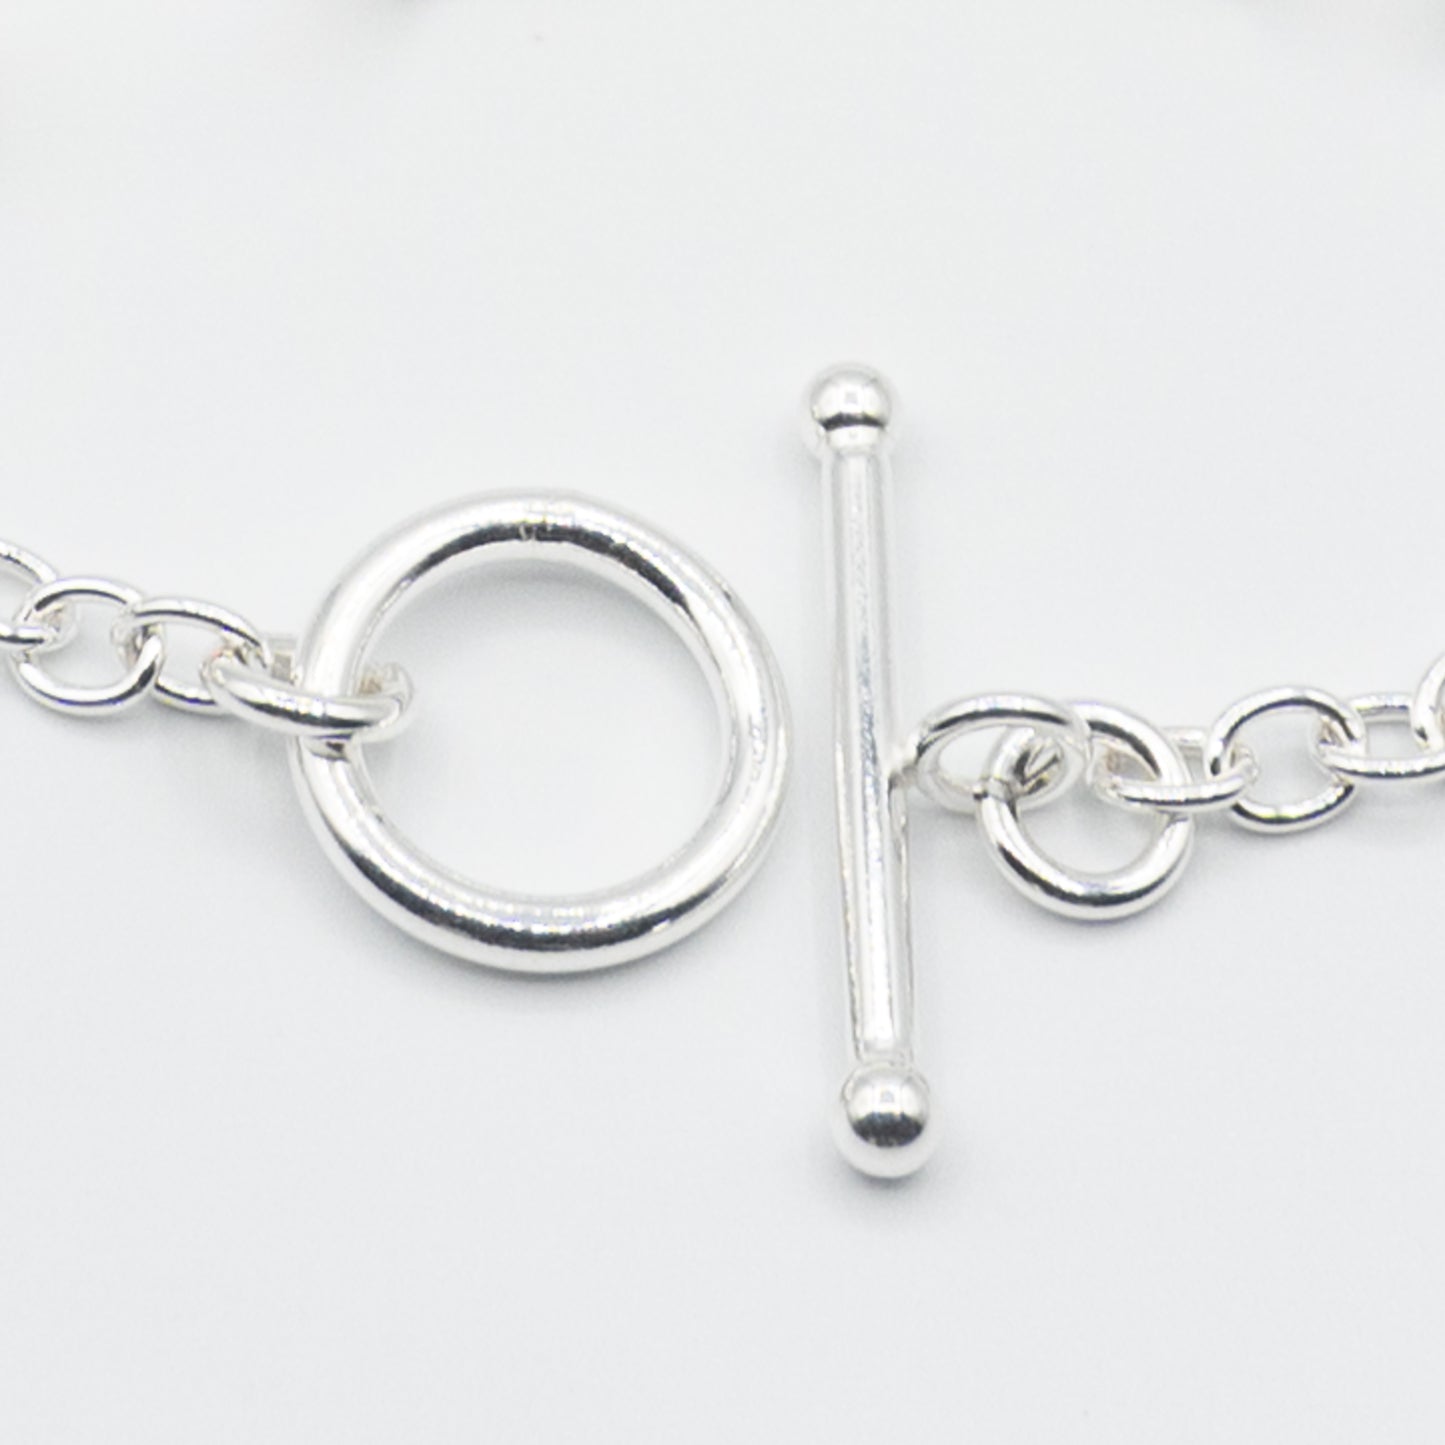 AVA - sterling silver bracelet with heart.